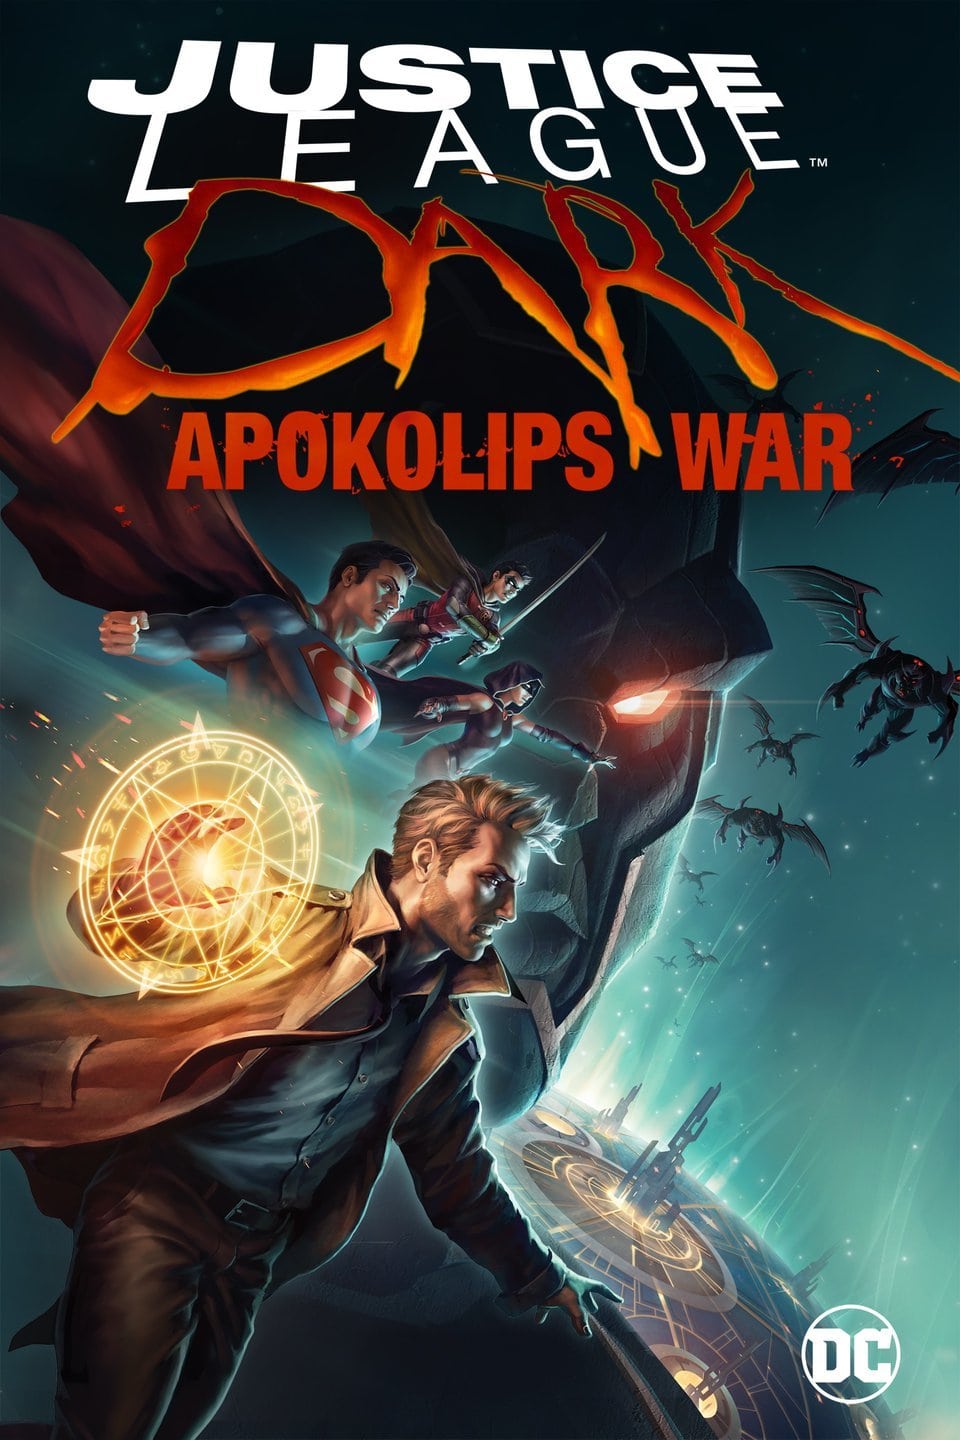 Justice league dark apokolips war 4K Vudu/Itunes Via Movies Anywhere